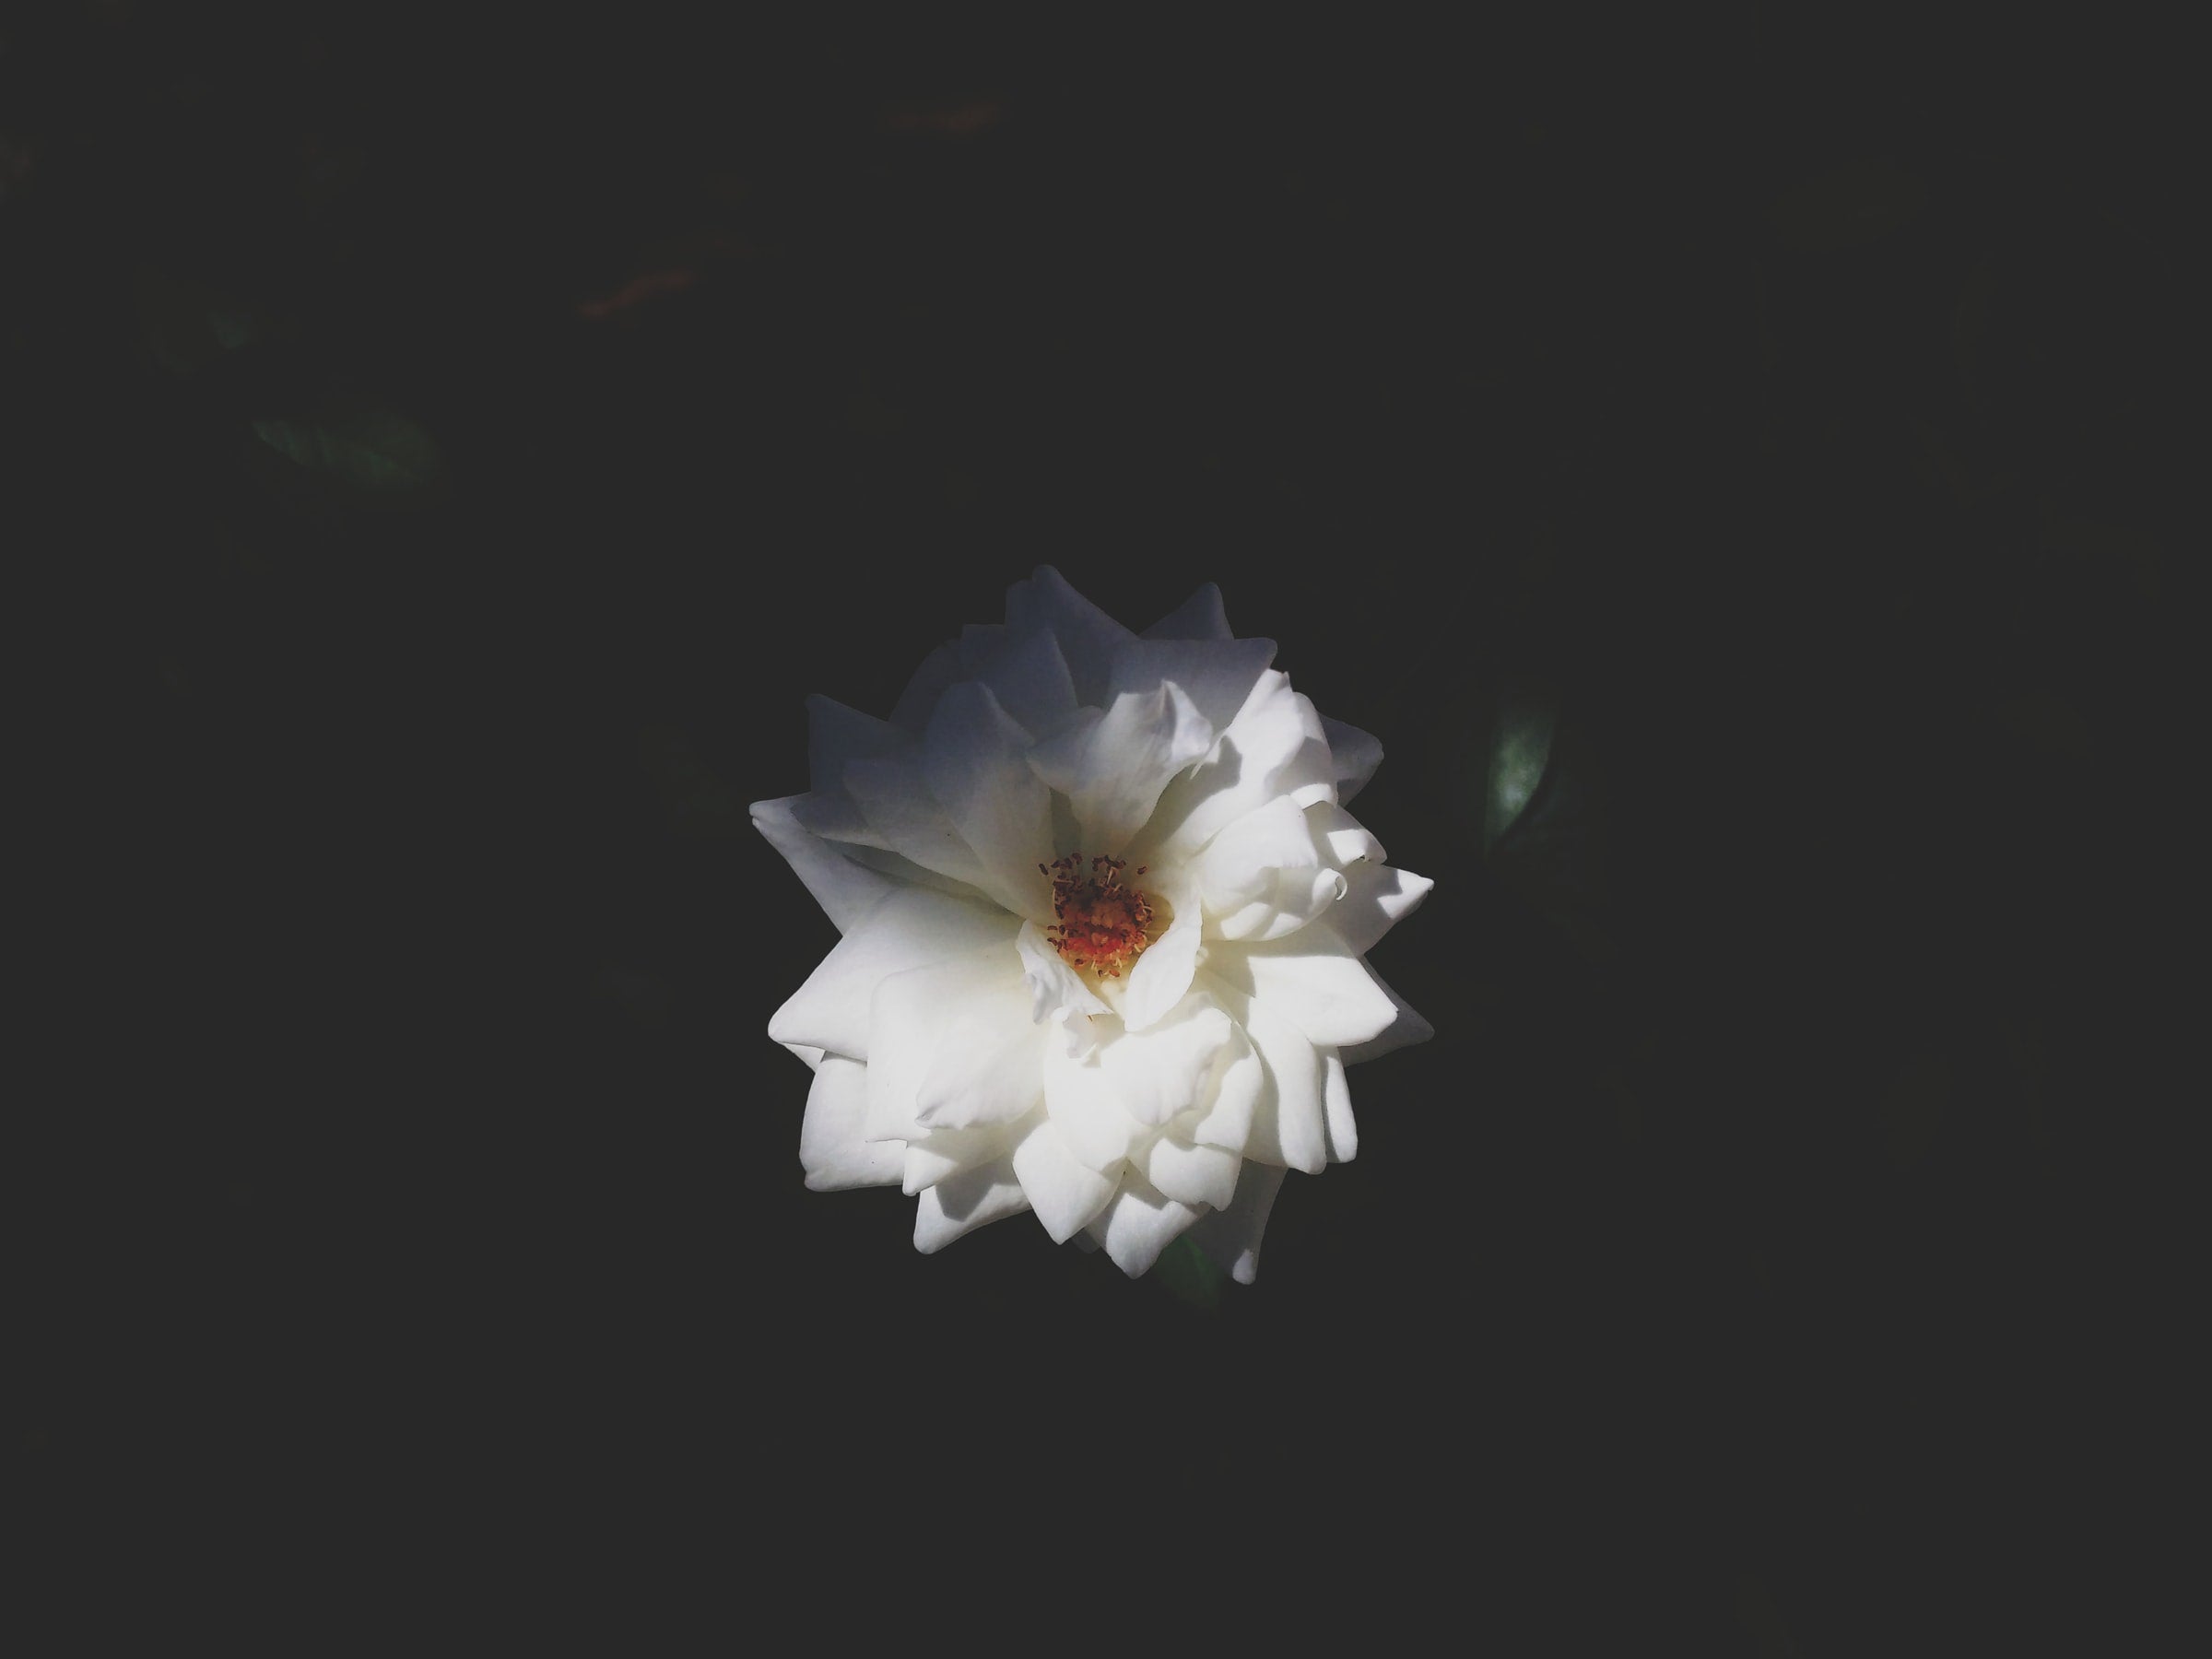 White flower emerging from darkness